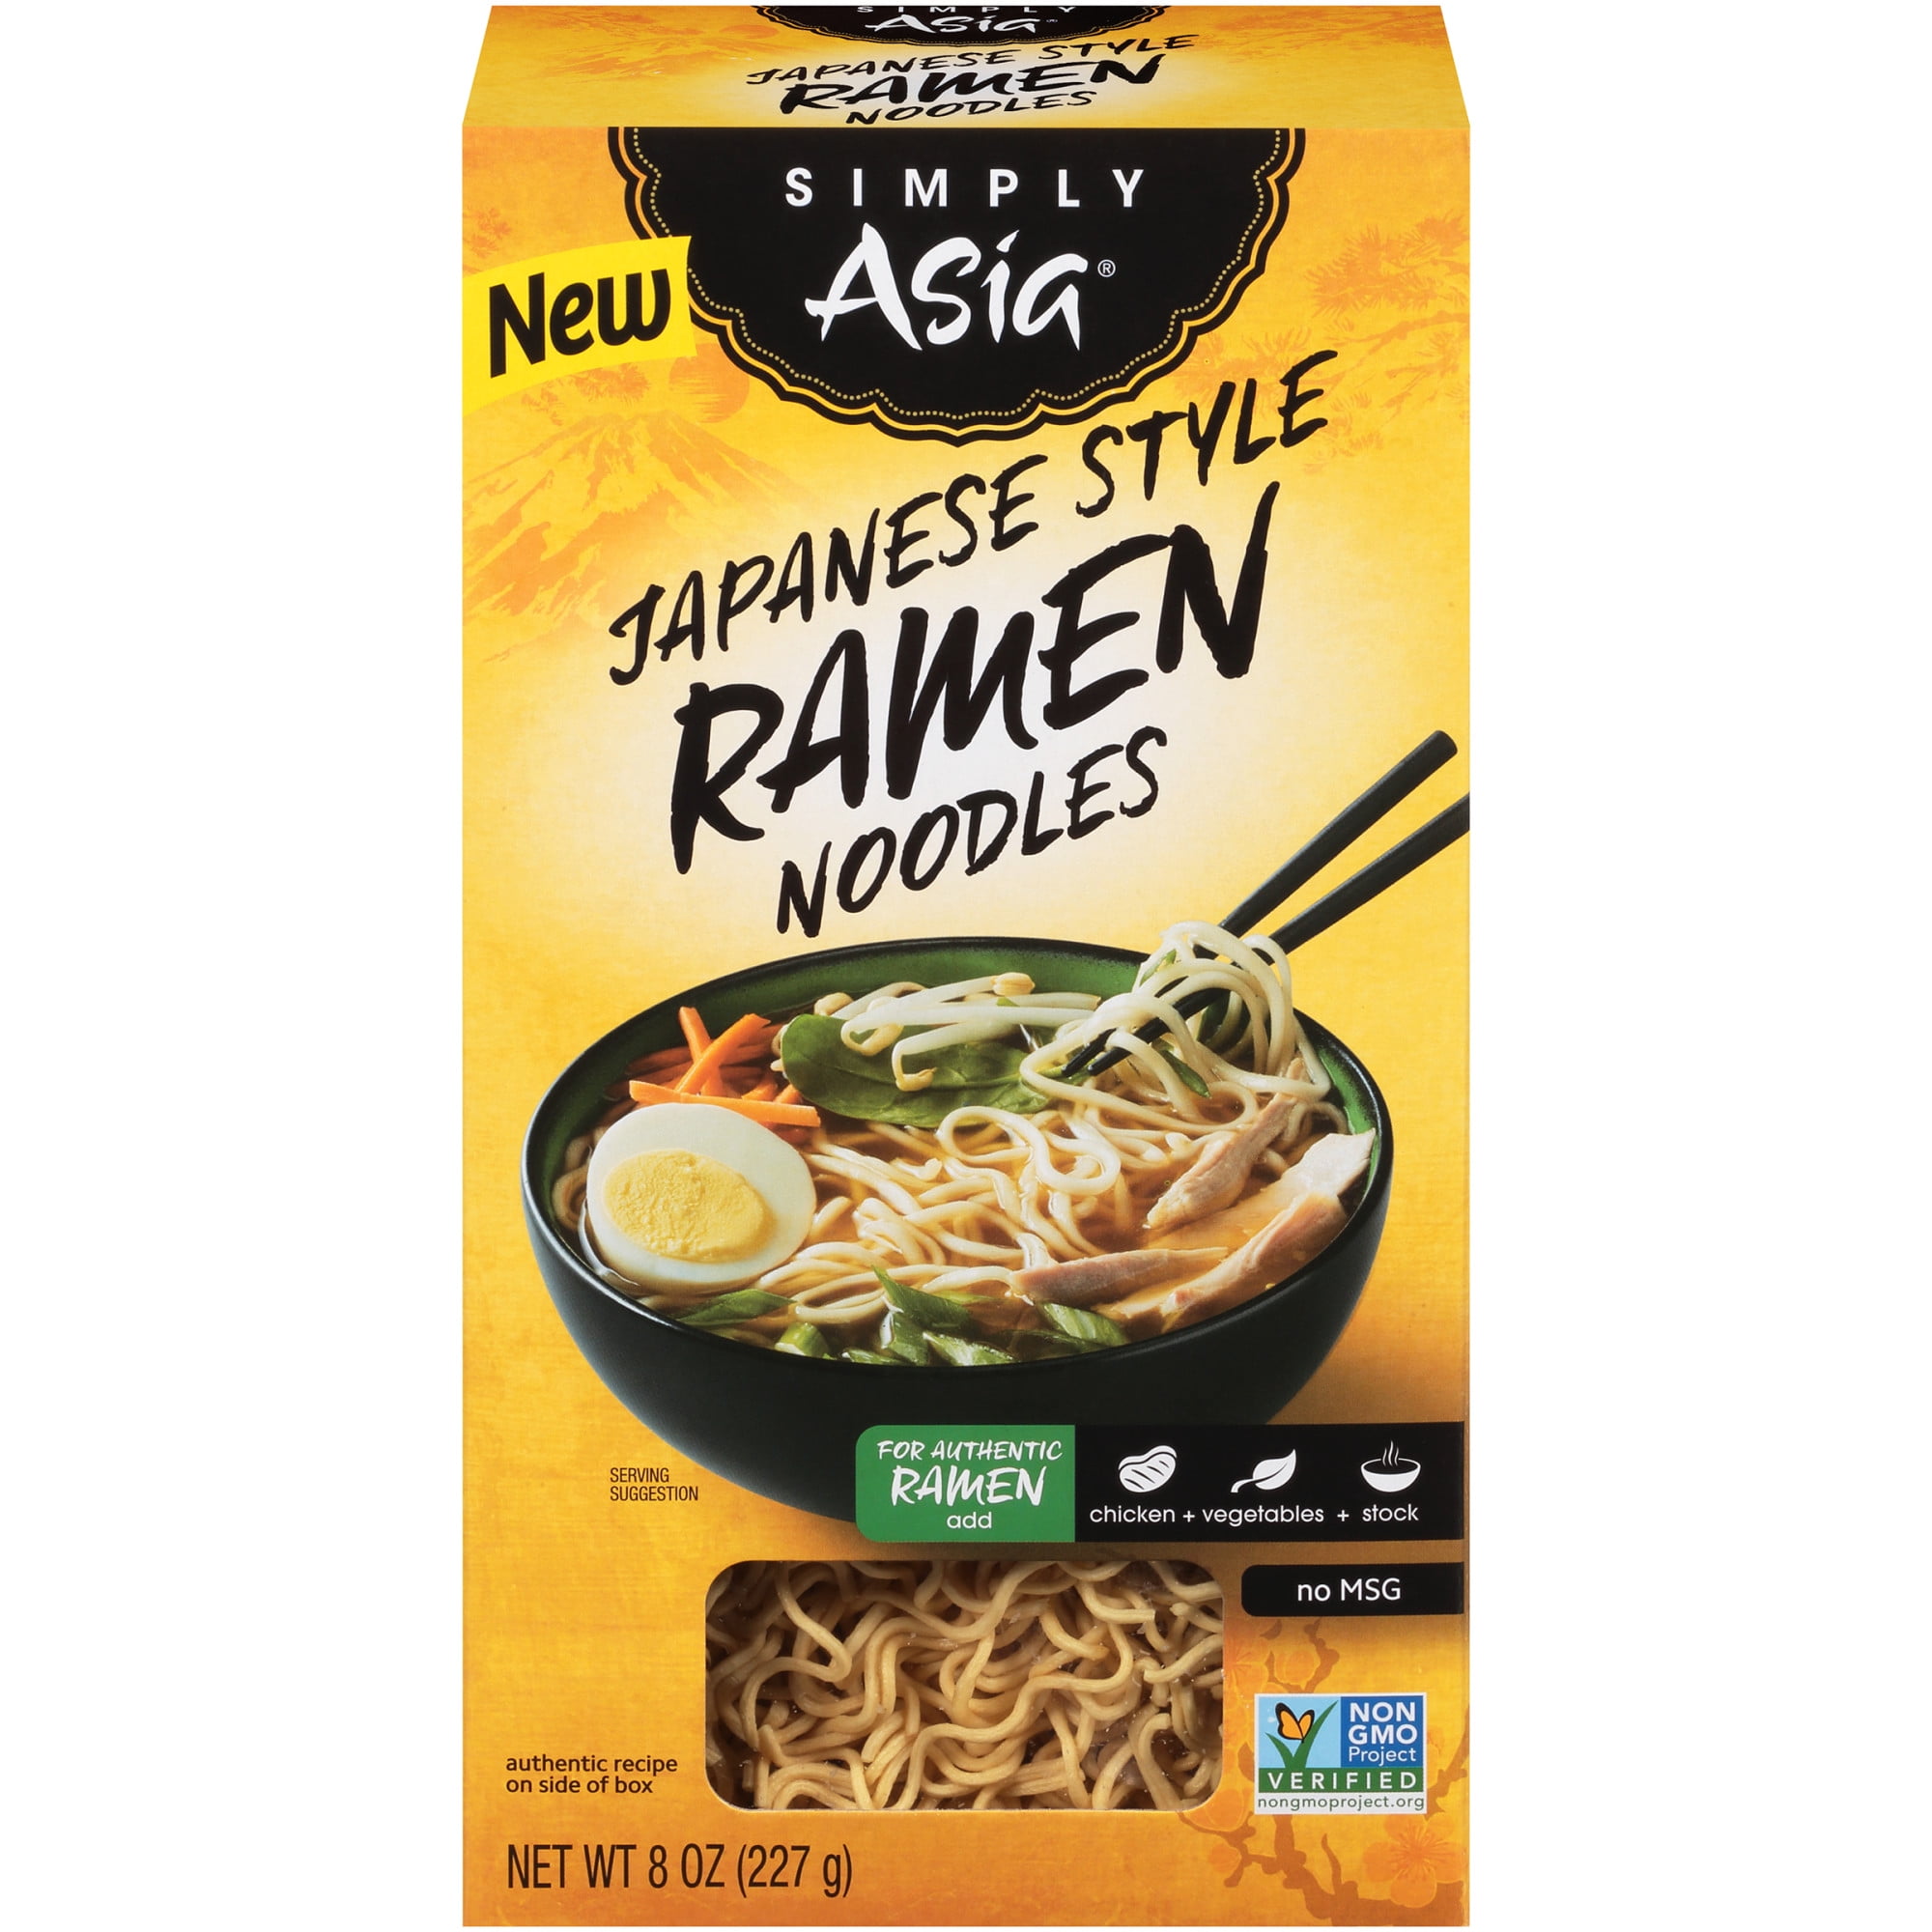 Simply Asia Japanese Style Ramen Noodles, 24 oz - Walmart.com